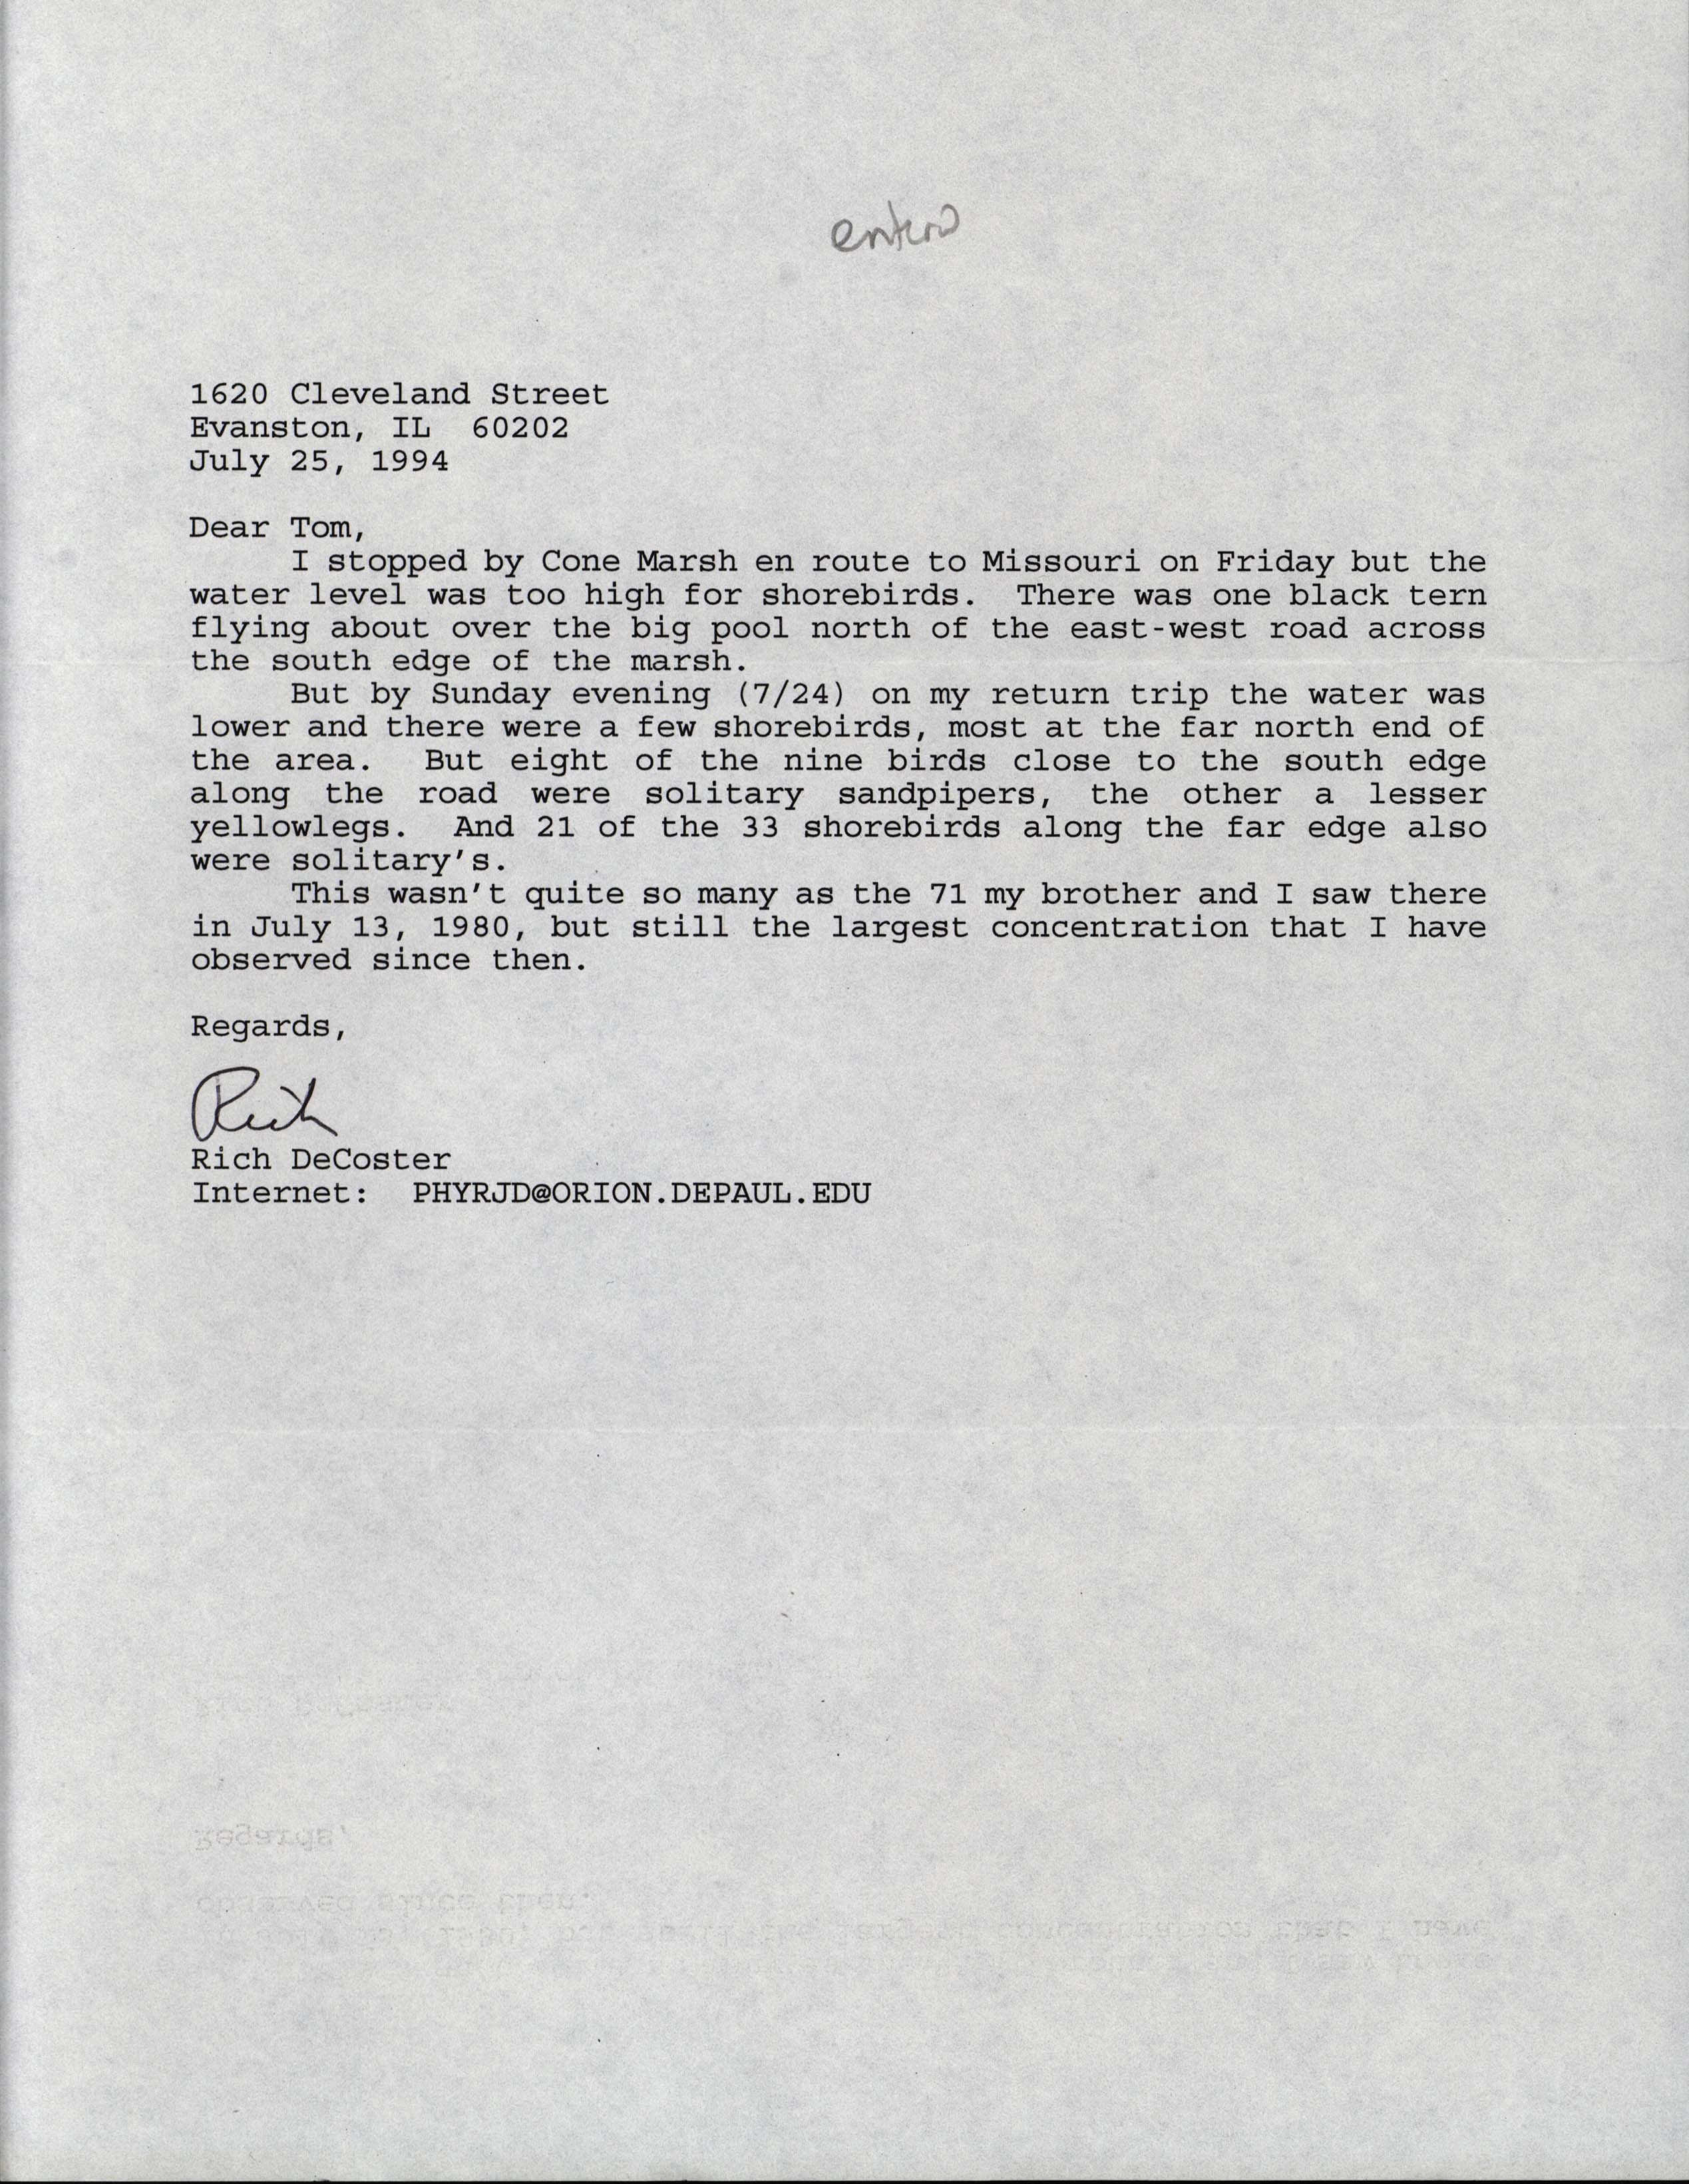 Rich DeCoster letter to Thomas Kent regarding shorebirds at Cone Marsh, July 25, 1994